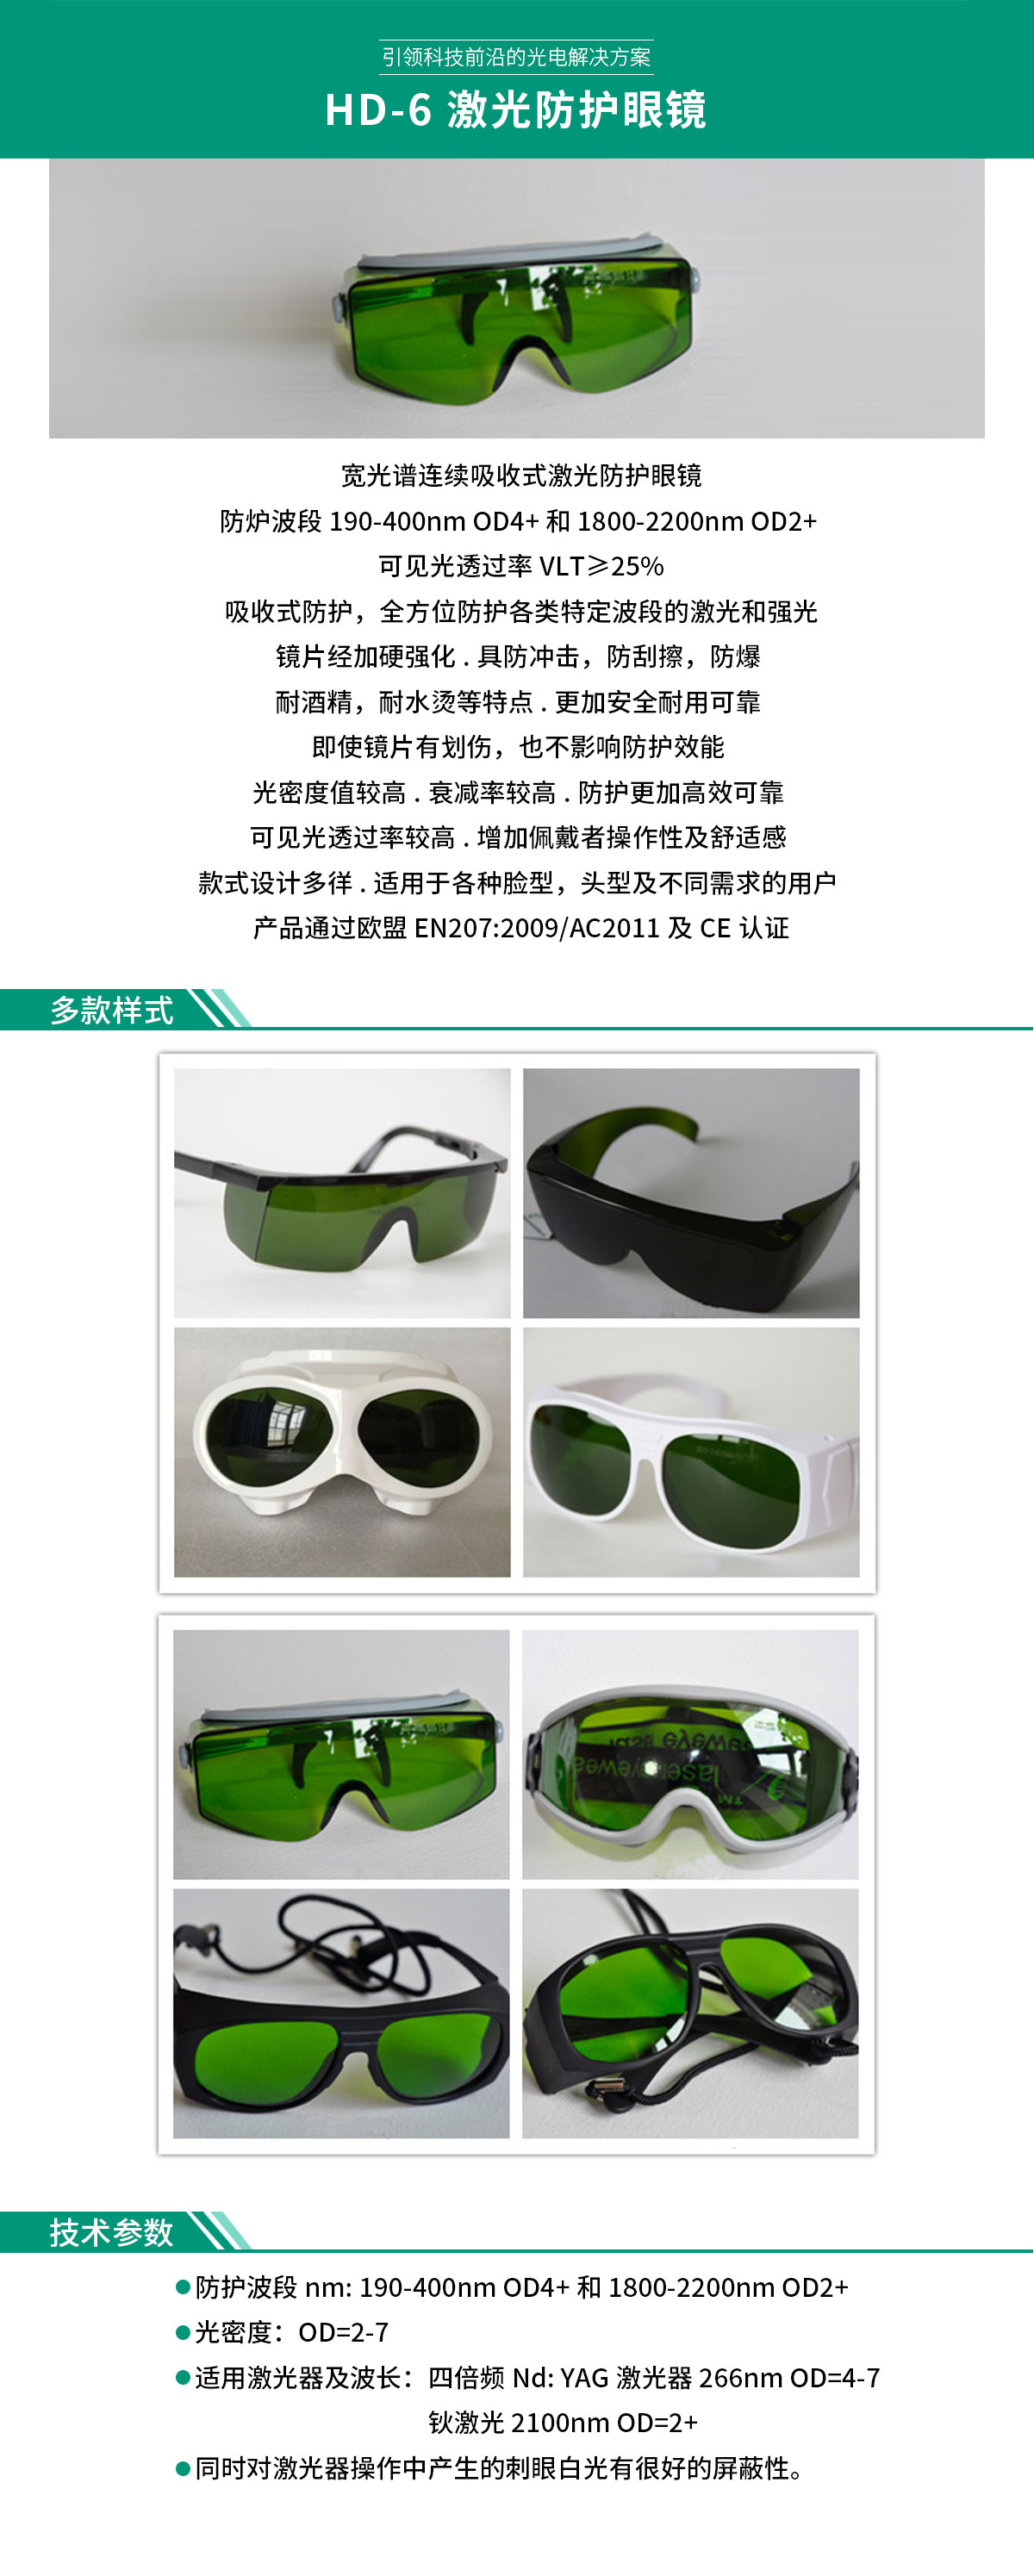 HD-6-激光防護眼鏡